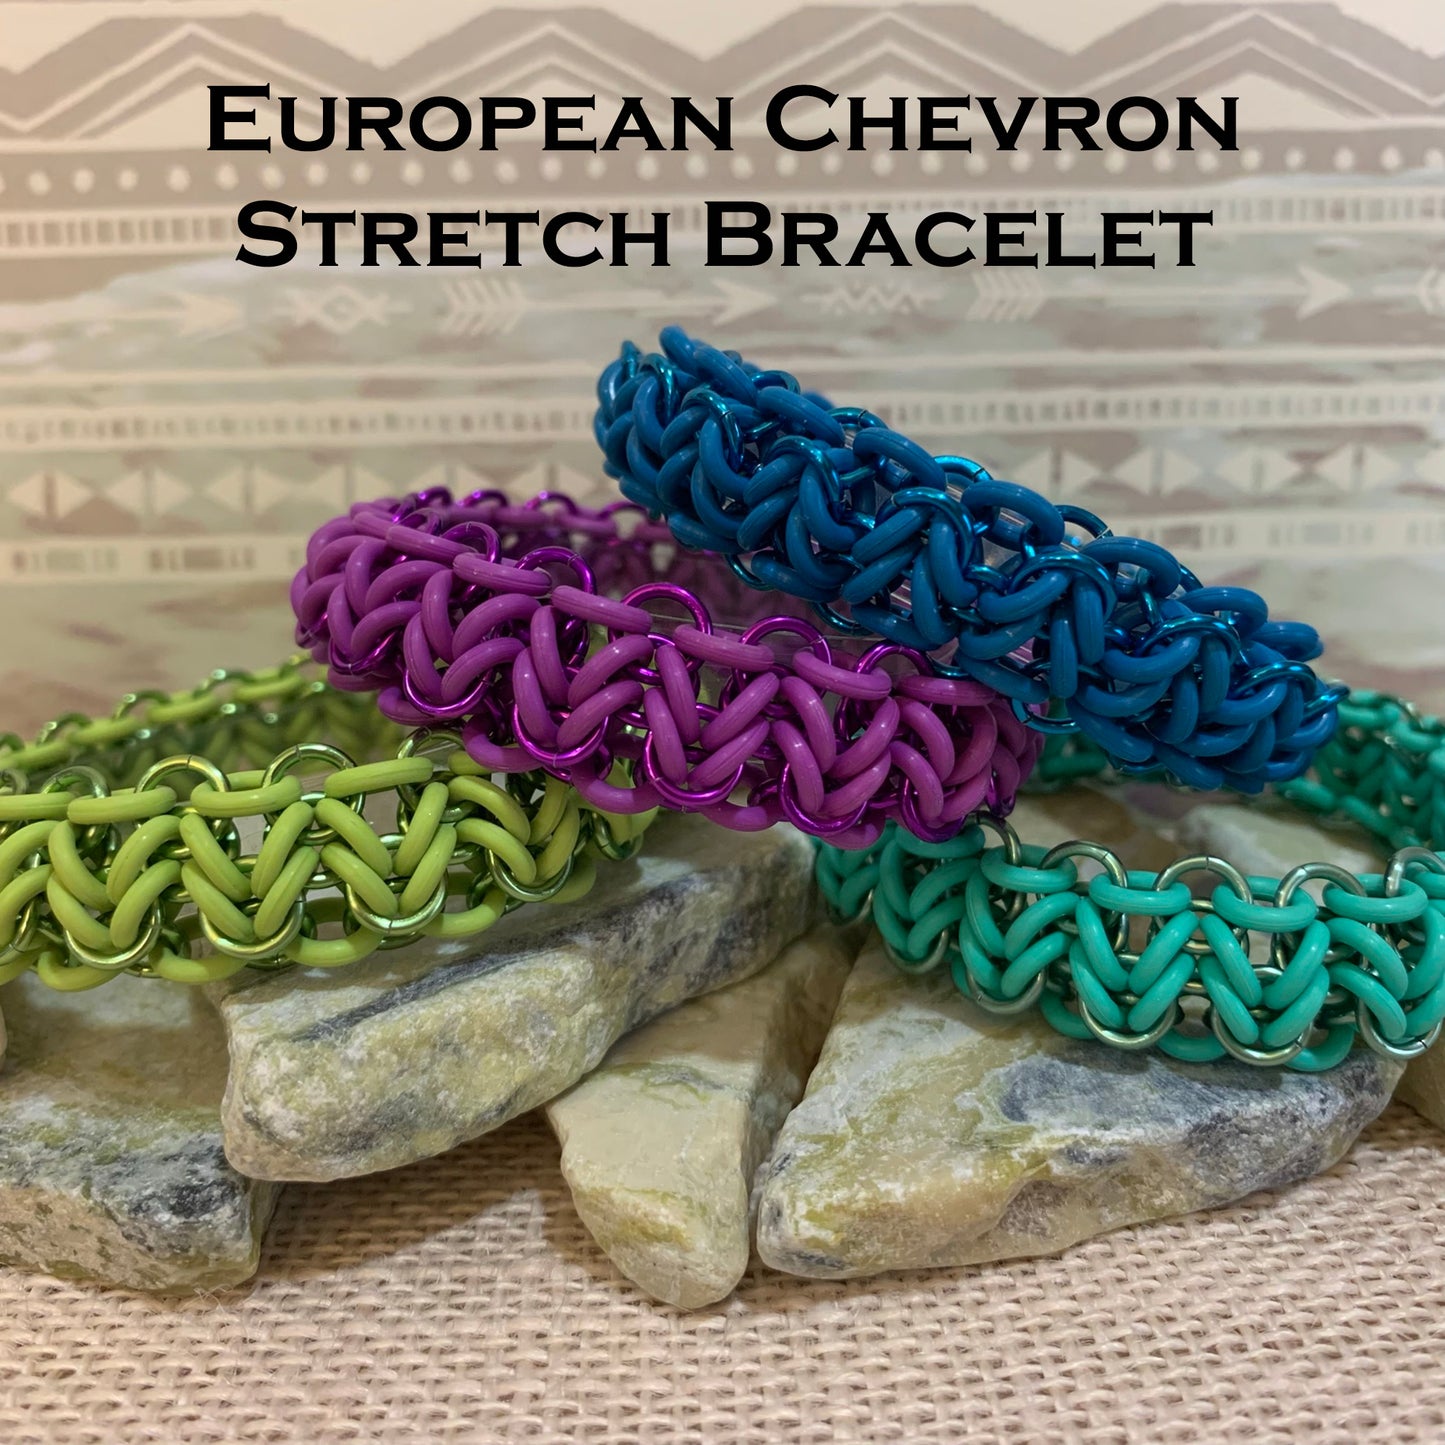 European Chevron Stretch Bracelet Kit with FREE video - Violet